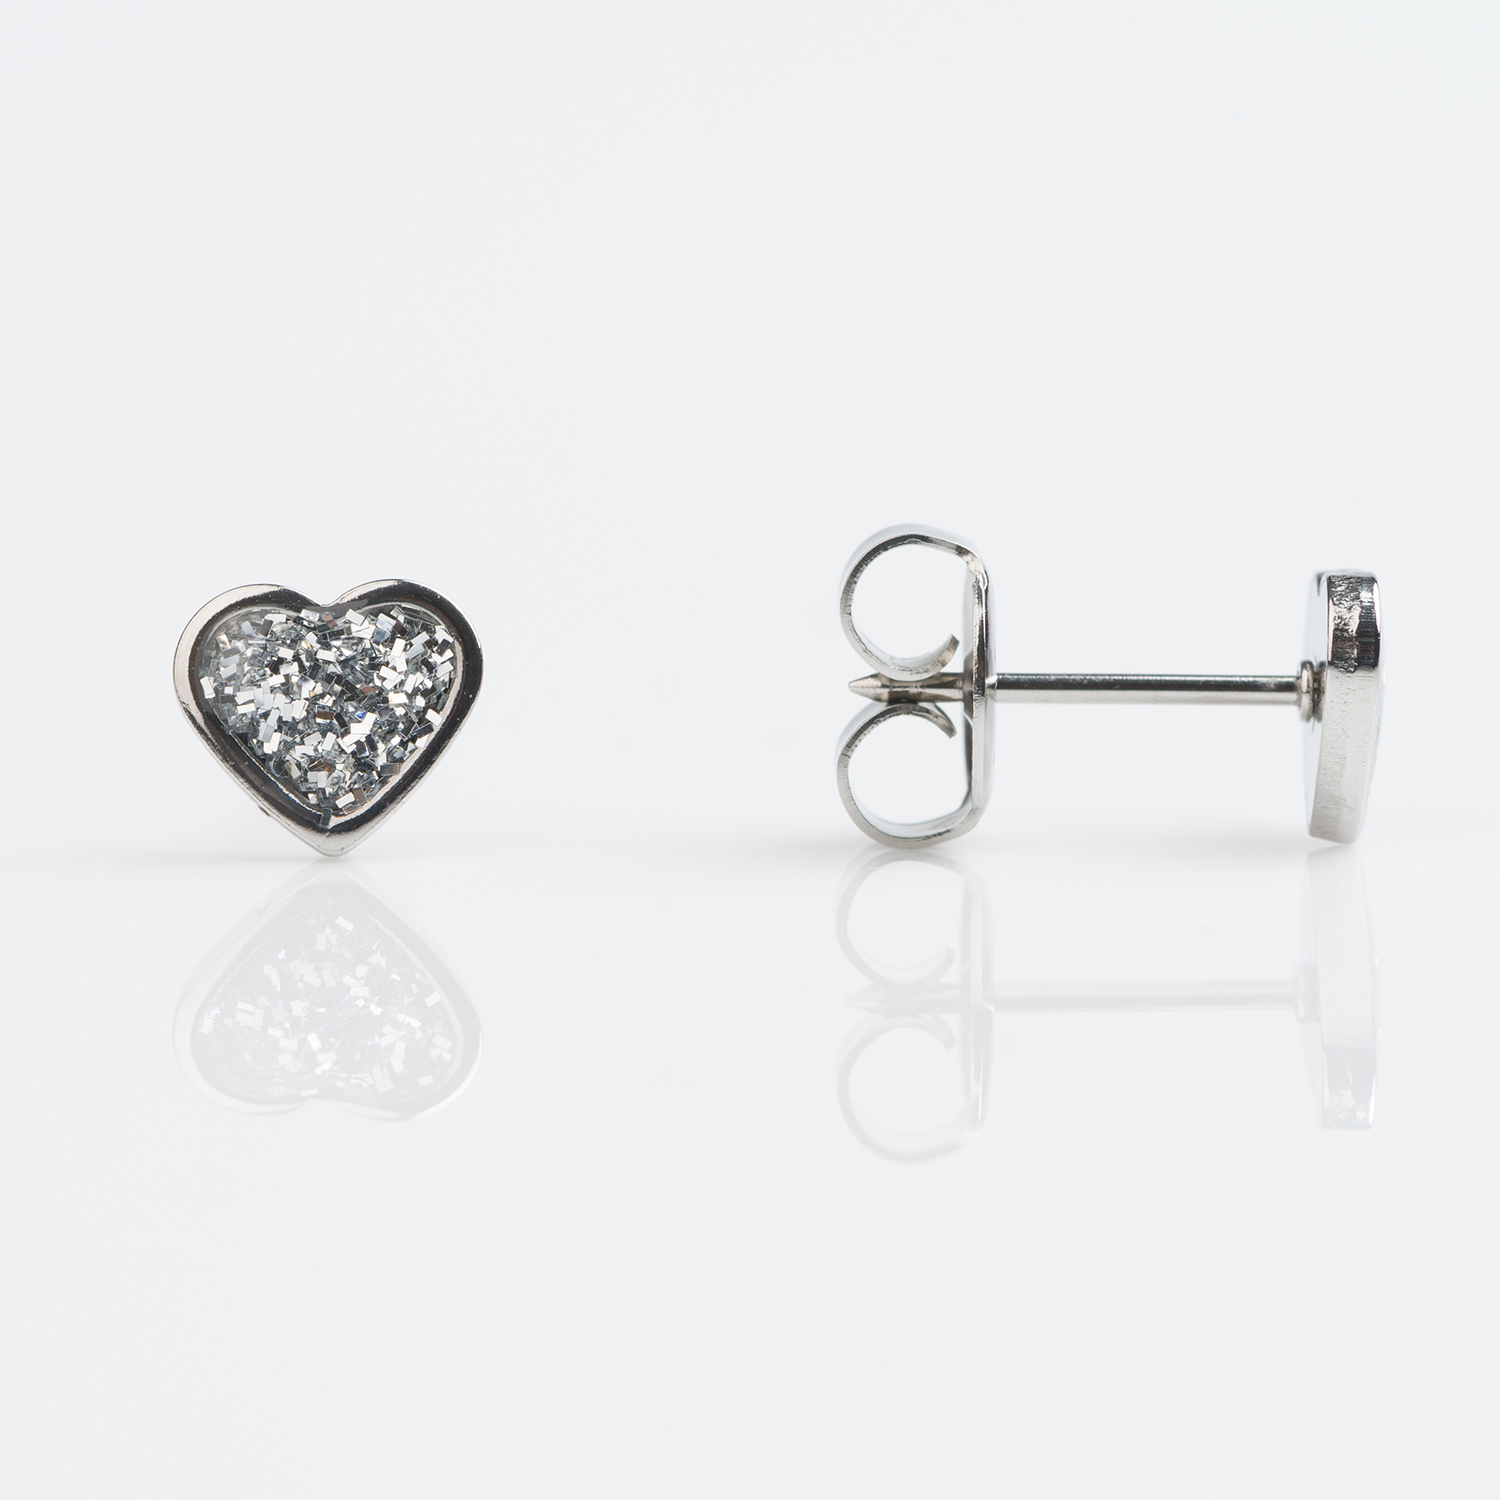 7524-3564 – Studex Stainless Clear Glitter Heart Piercing Earrings